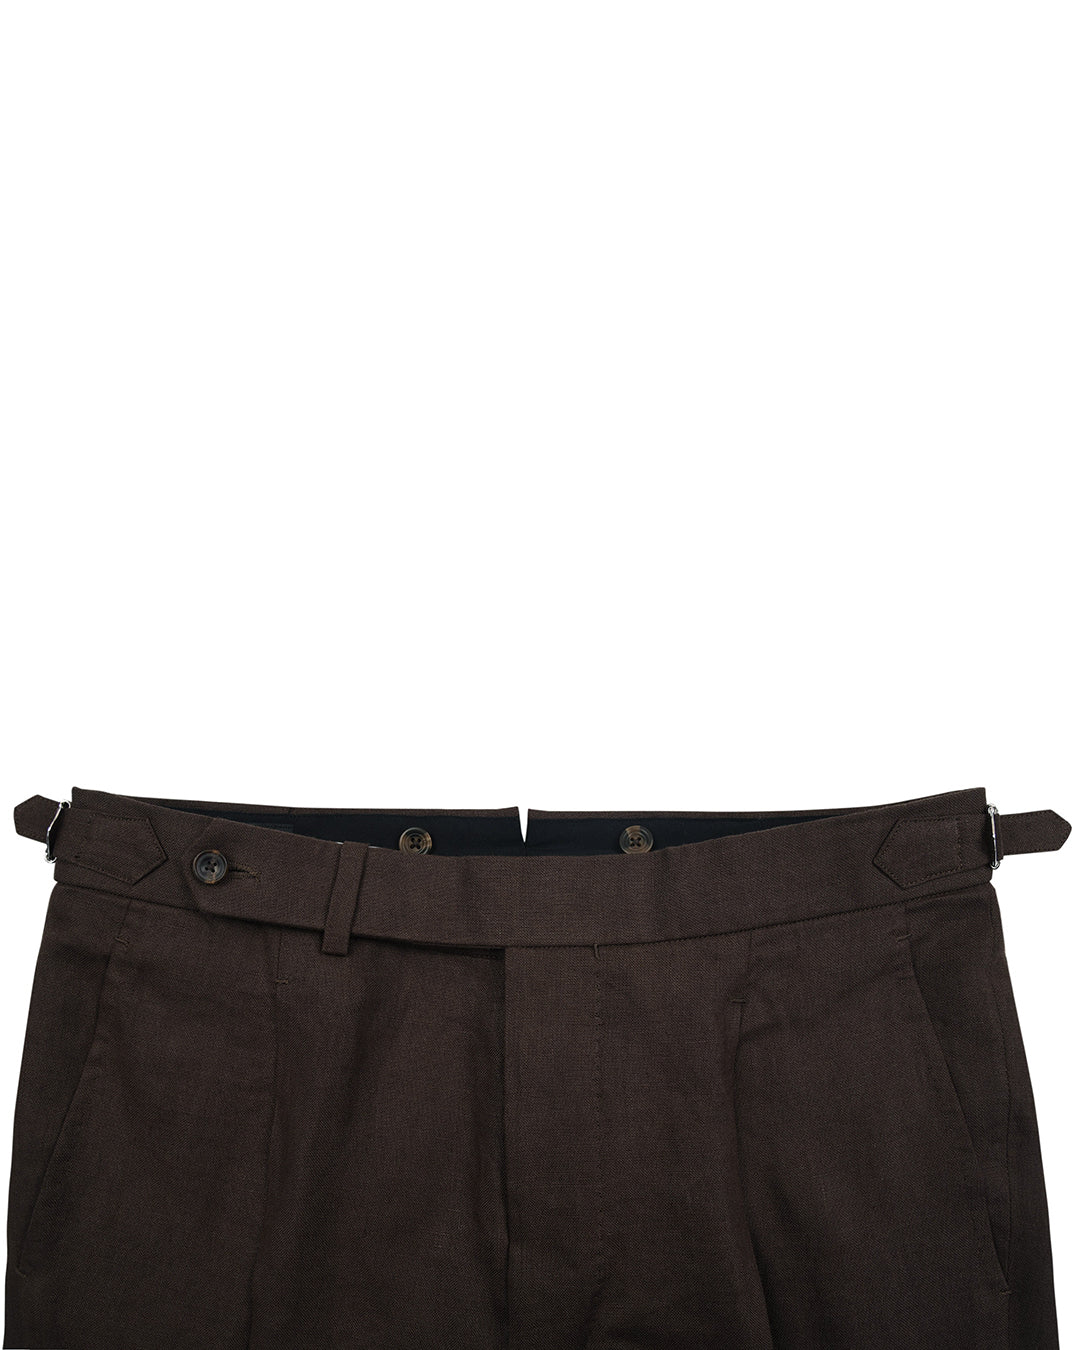 Front view of custom linen pants for men by Luxire in dark brown